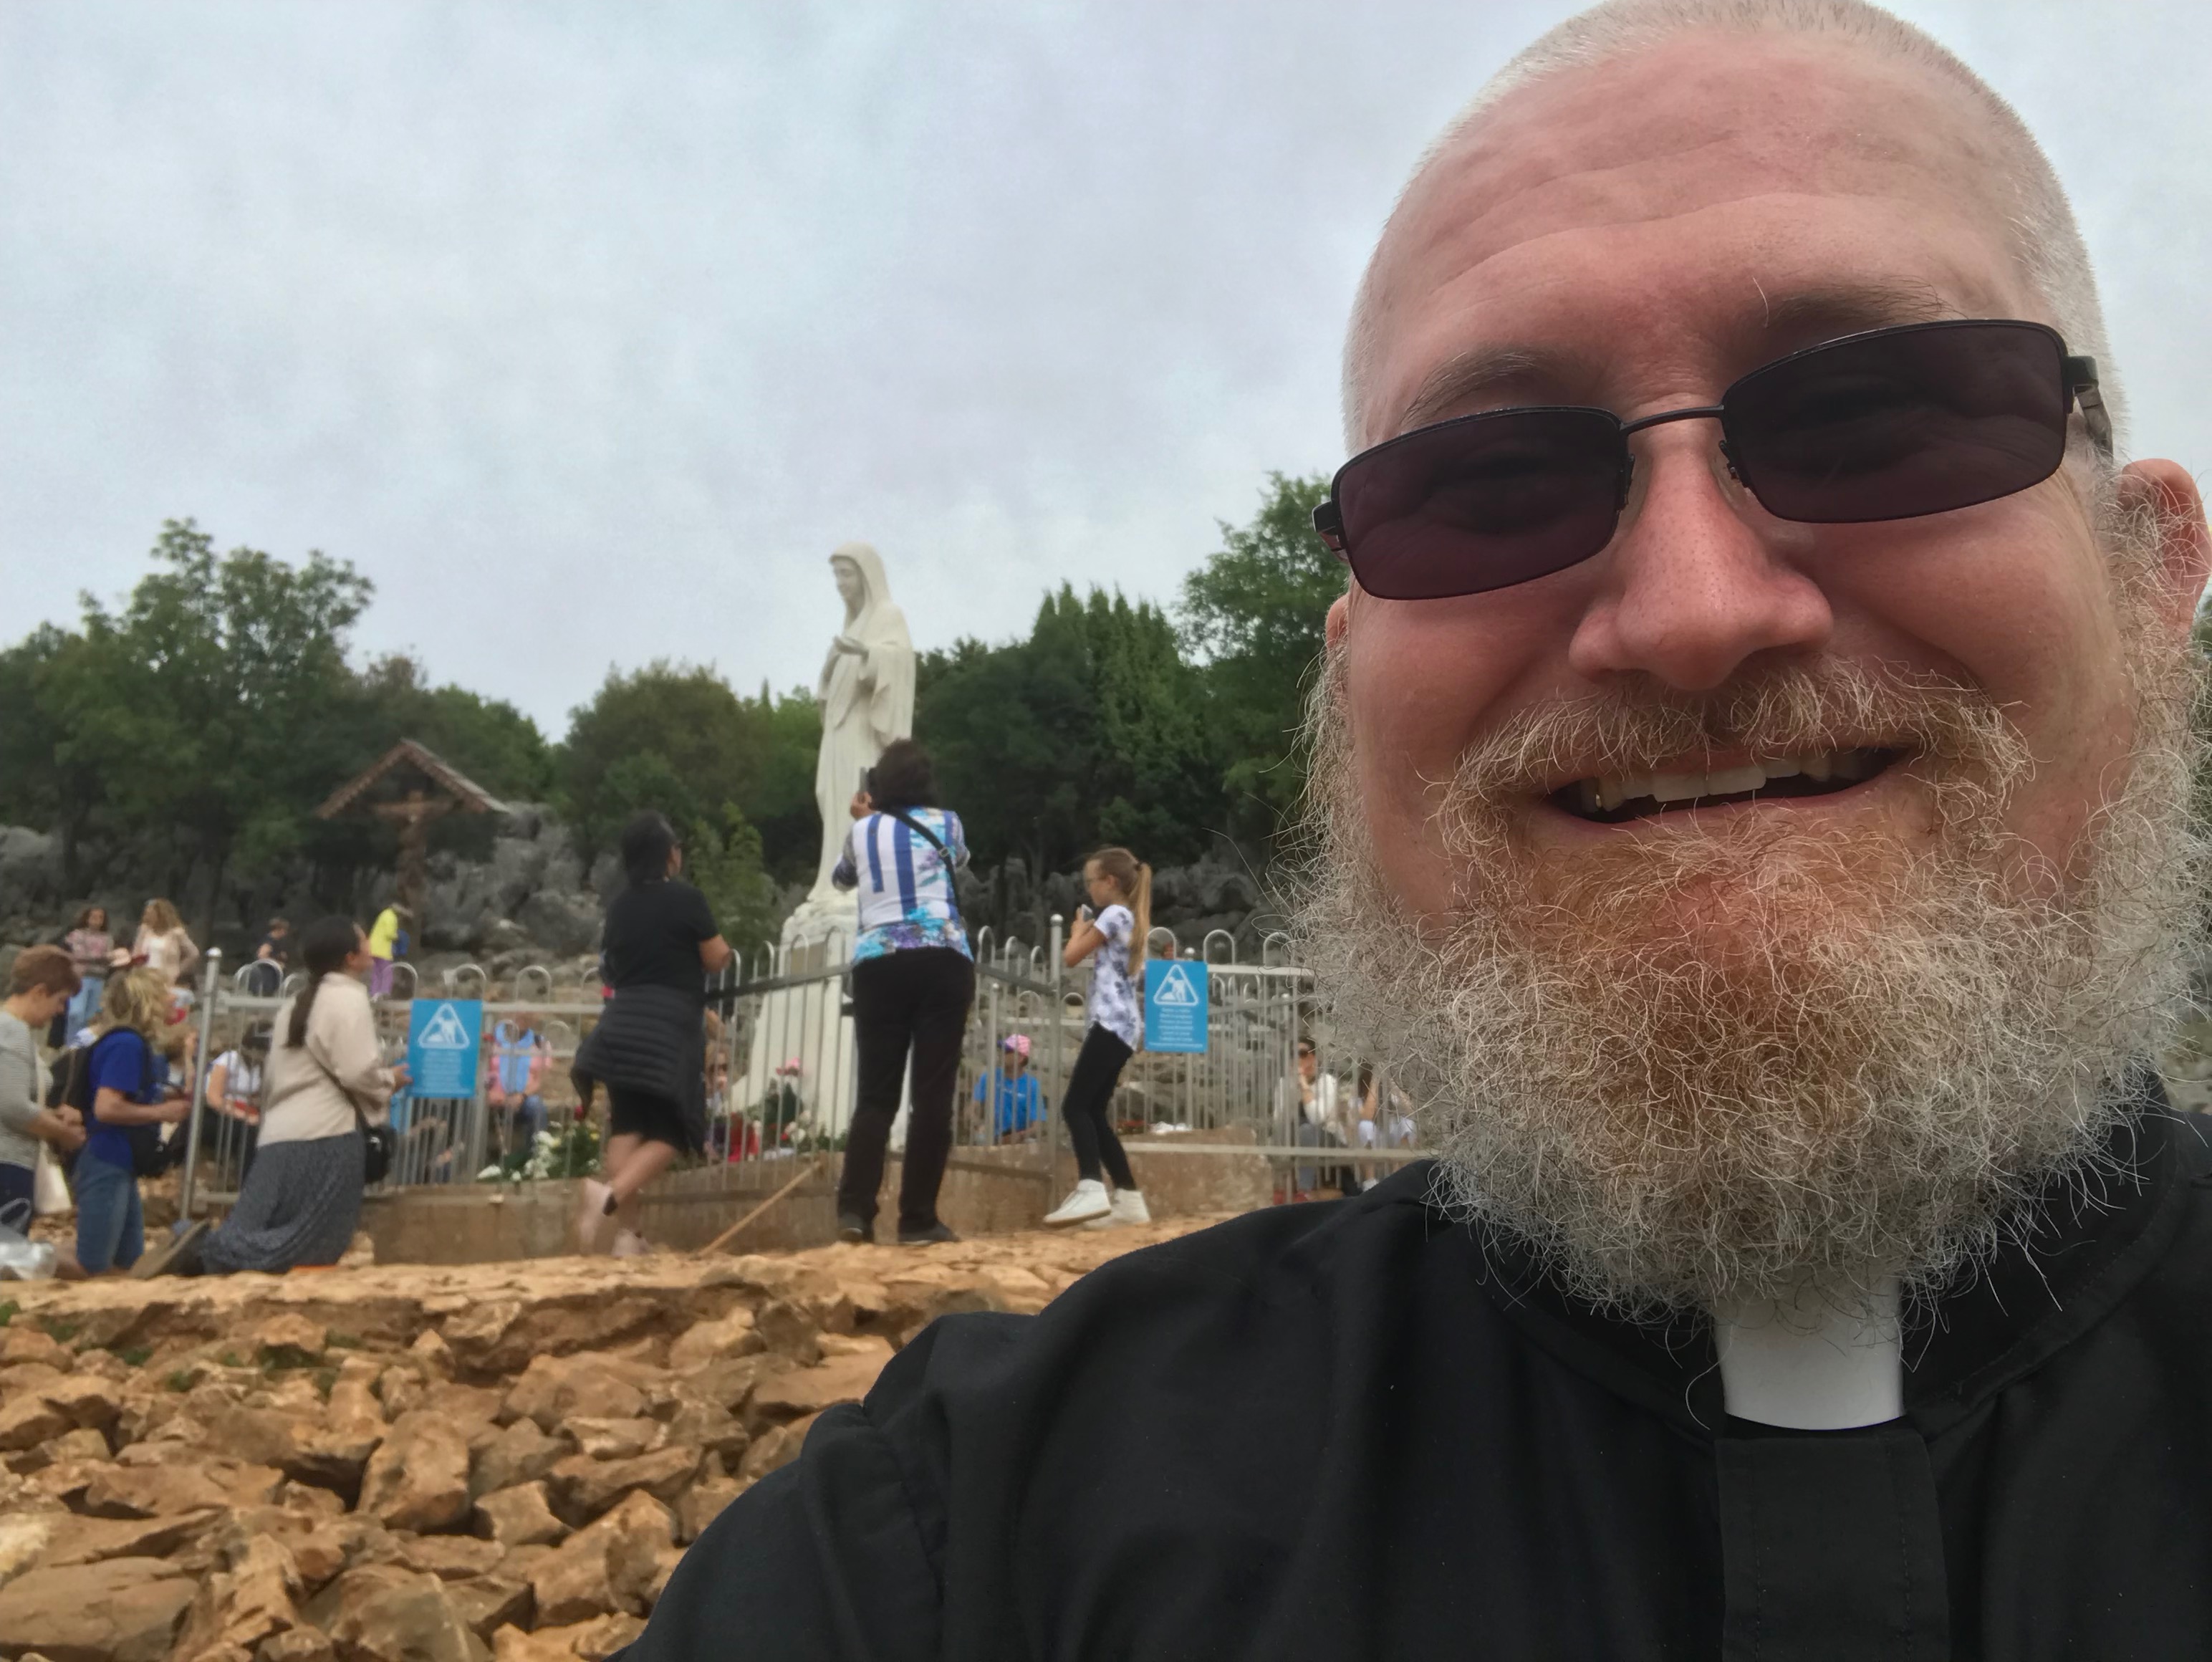 News from Fr. Blazek – Pilgrimage to Medjugorje and Rome